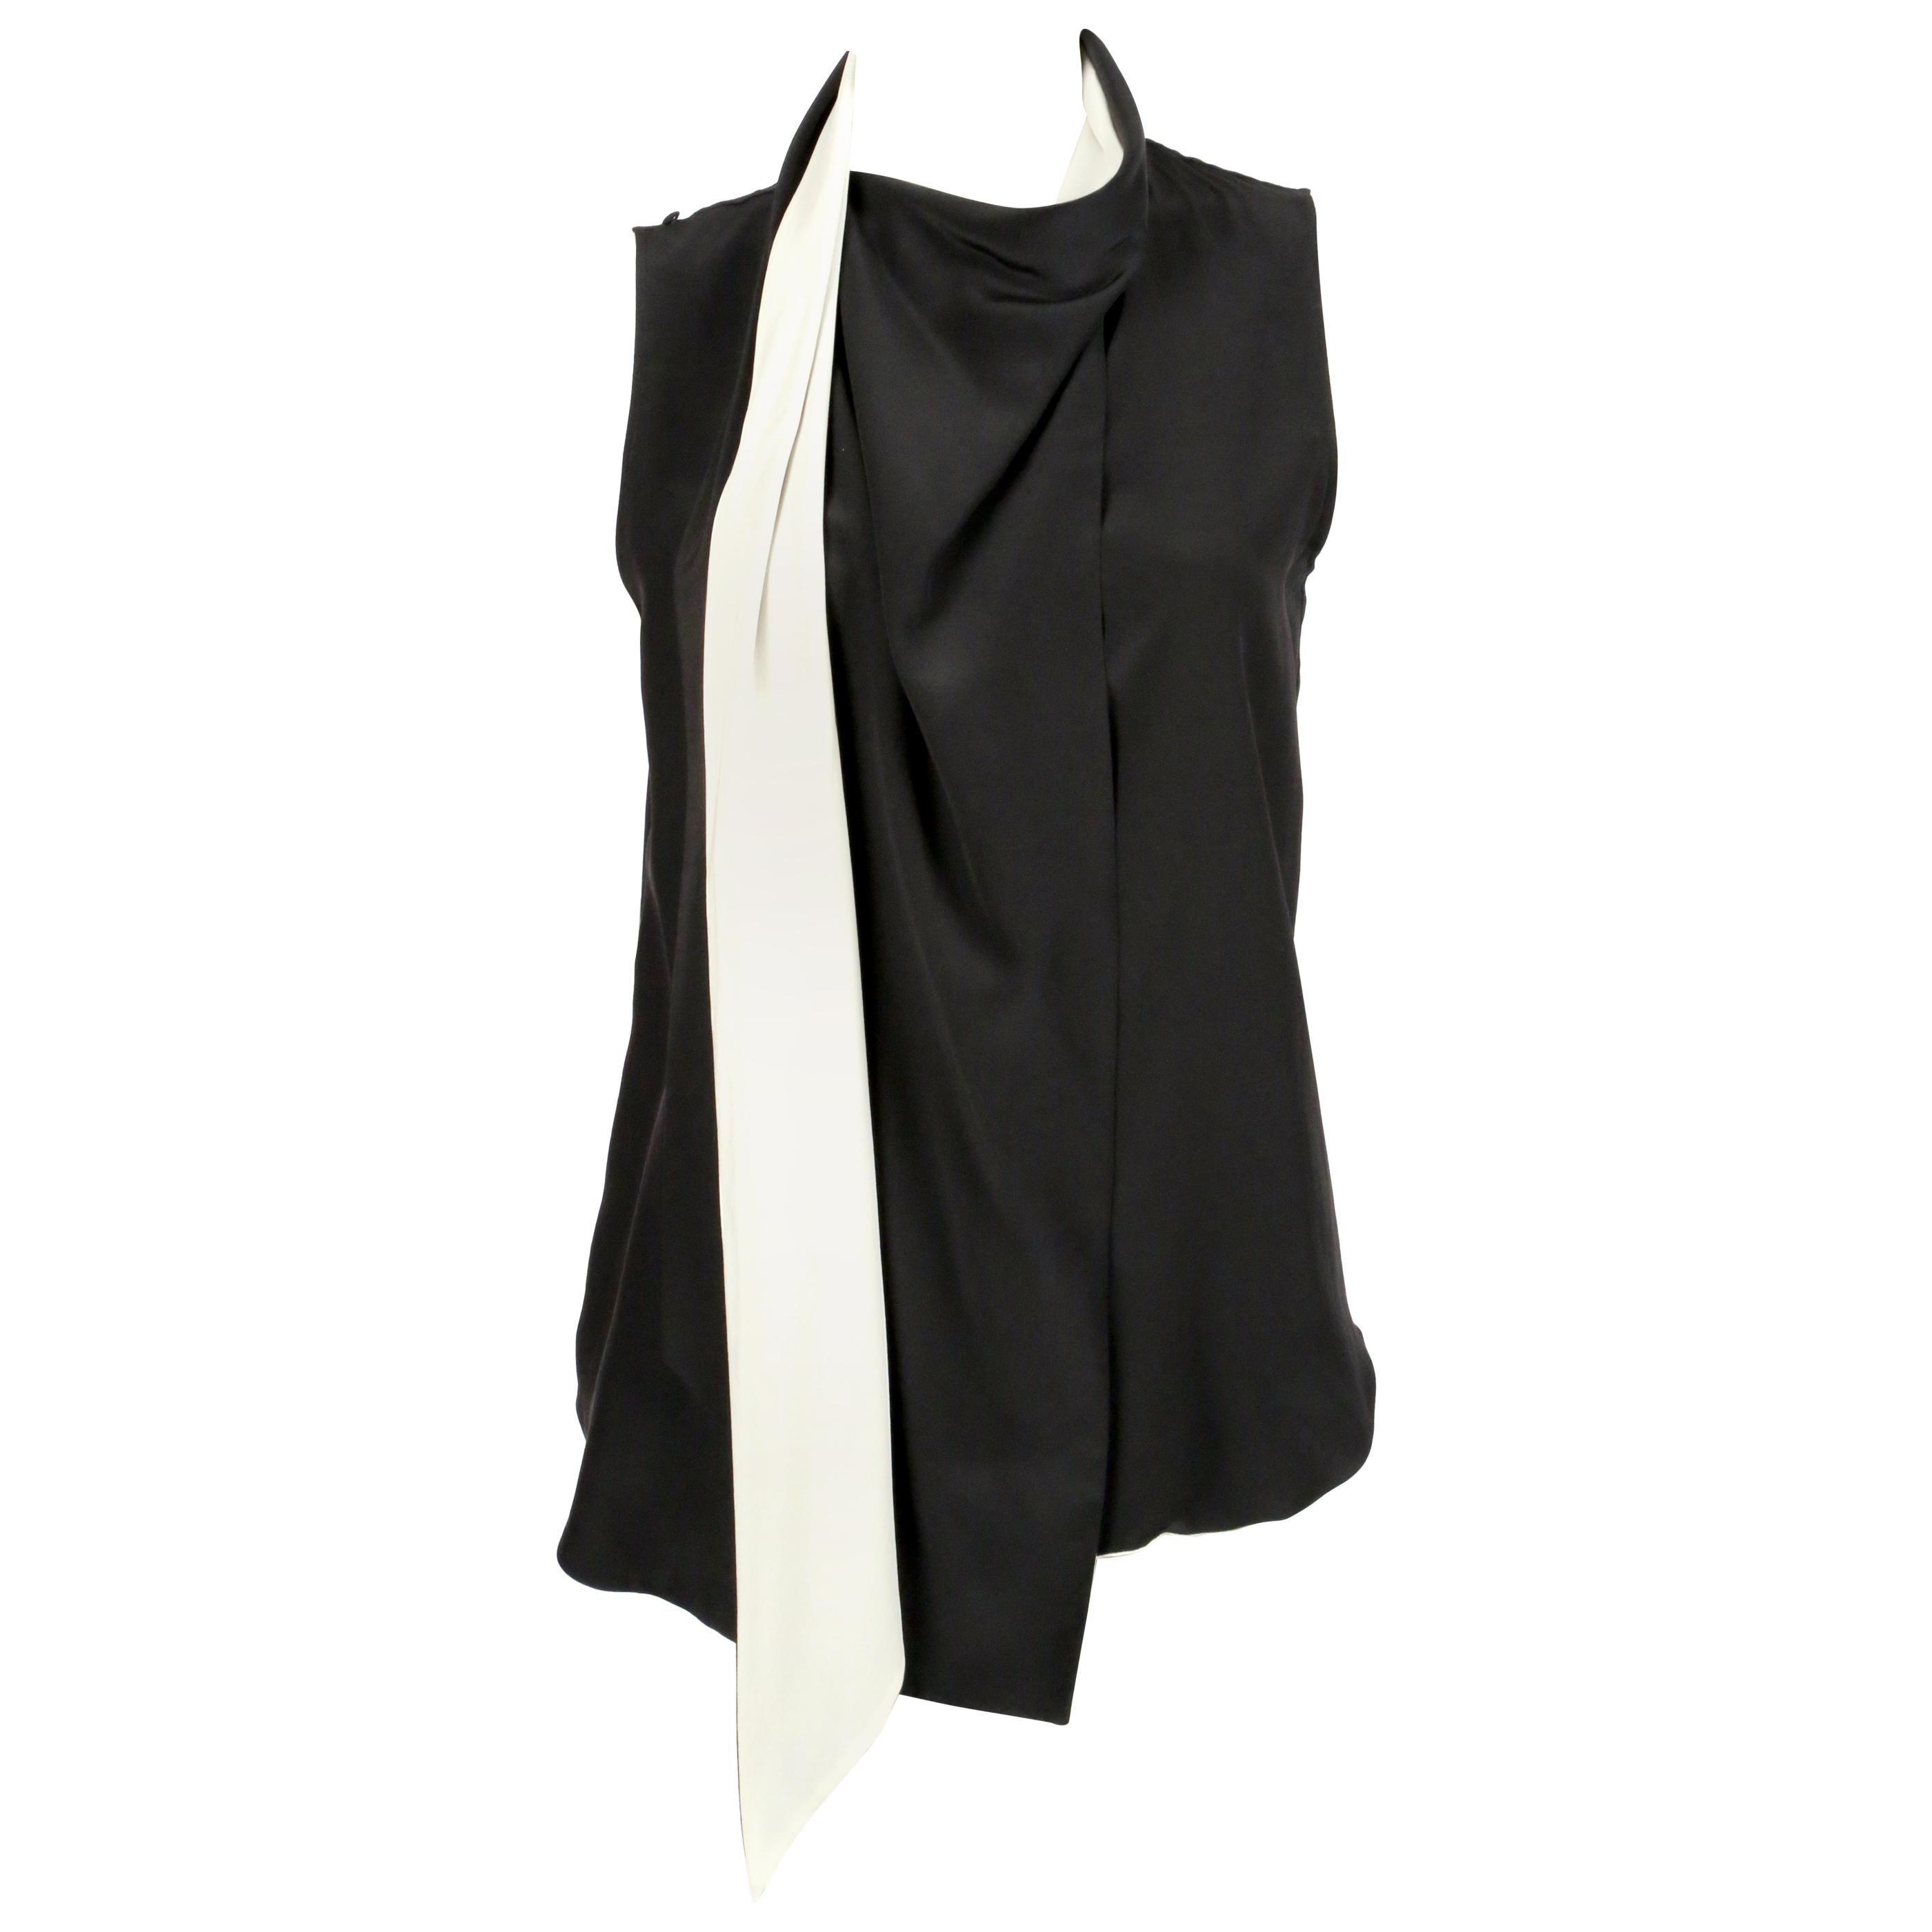 unworn 2010 CELINE by Phoebe Philo black & cream silk top with draped neckline